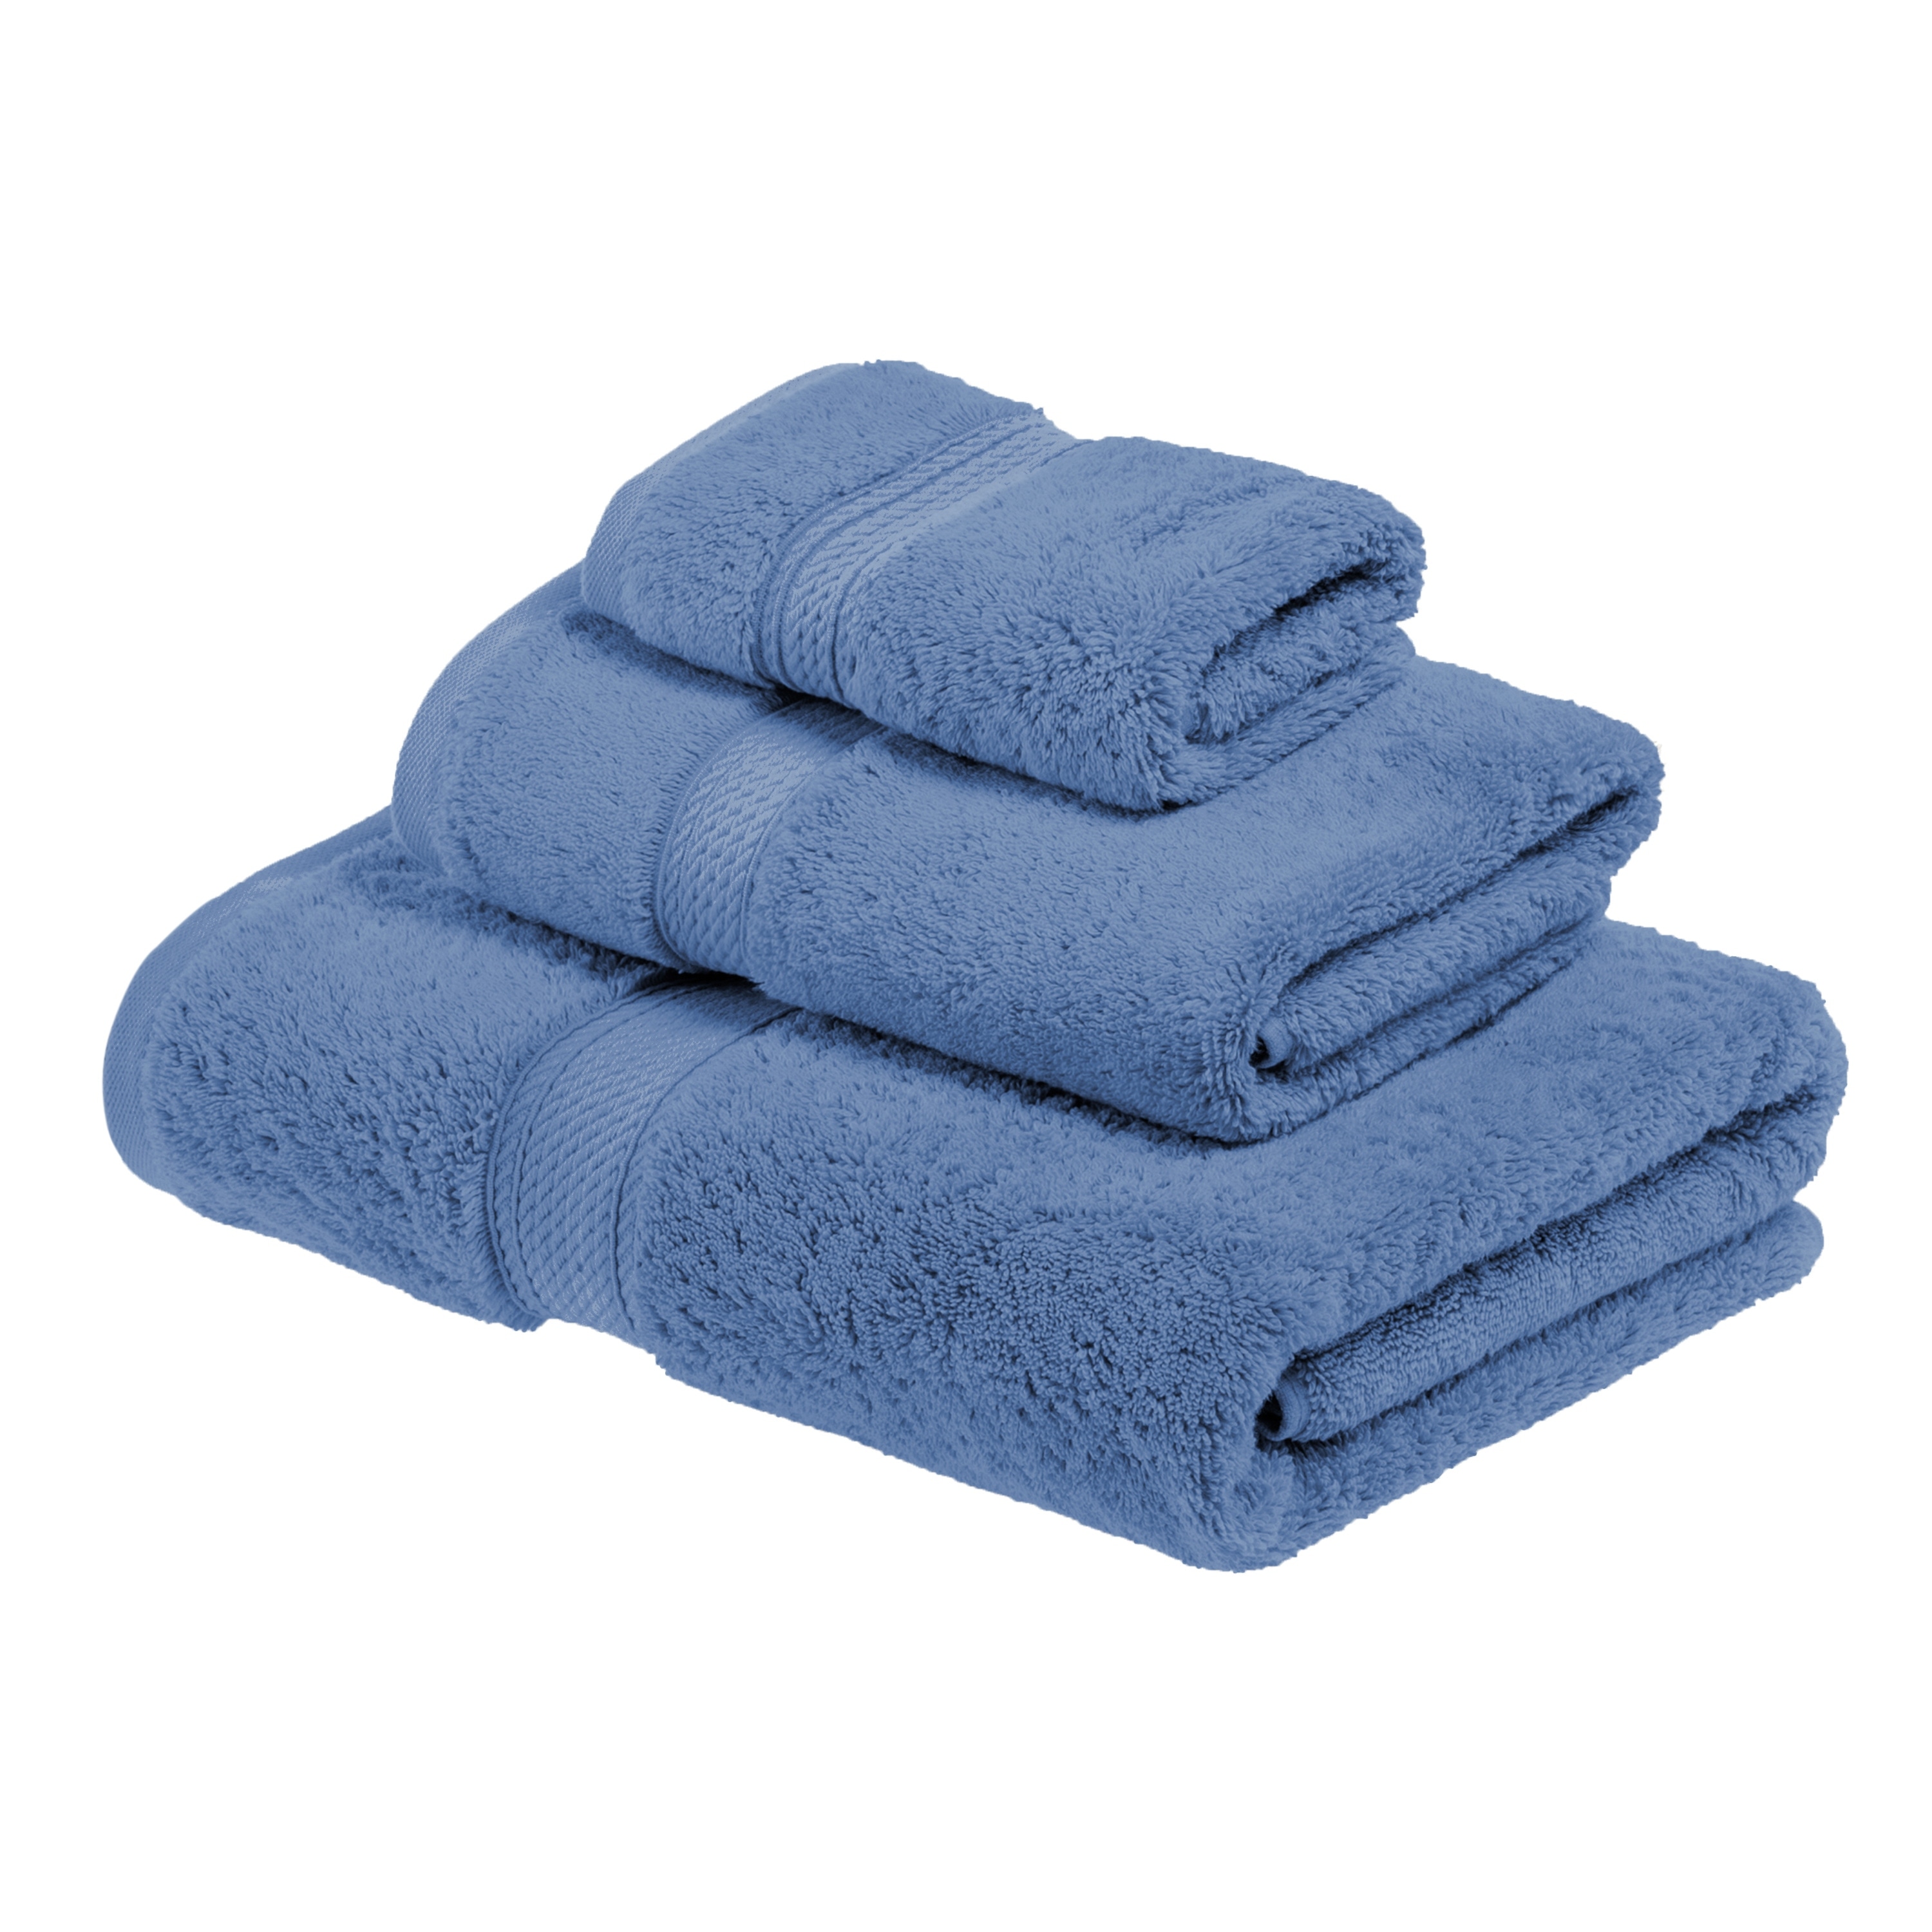 Economy Towel Set, 126 Towels, Bath Towels, Hand Towels, and